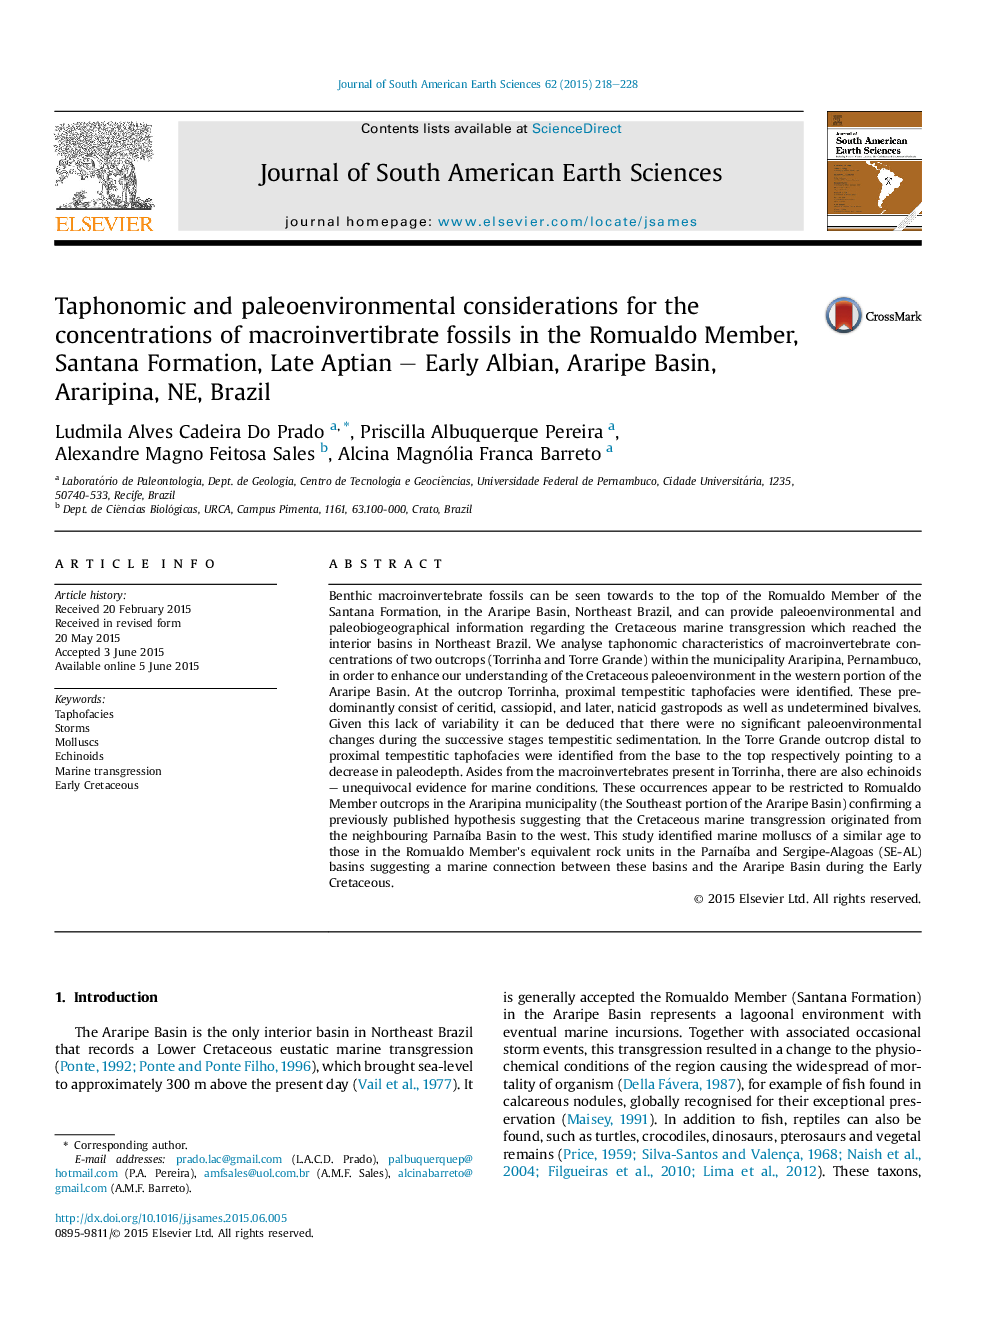 Taphonomic and paleoenvironmental considerations for the concentrations of macroinvertibrate fossils in the Romualdo Member, Santana Formation, Late Aptian – Early Albian, Araripe Basin, Araripina, NE, Brazil